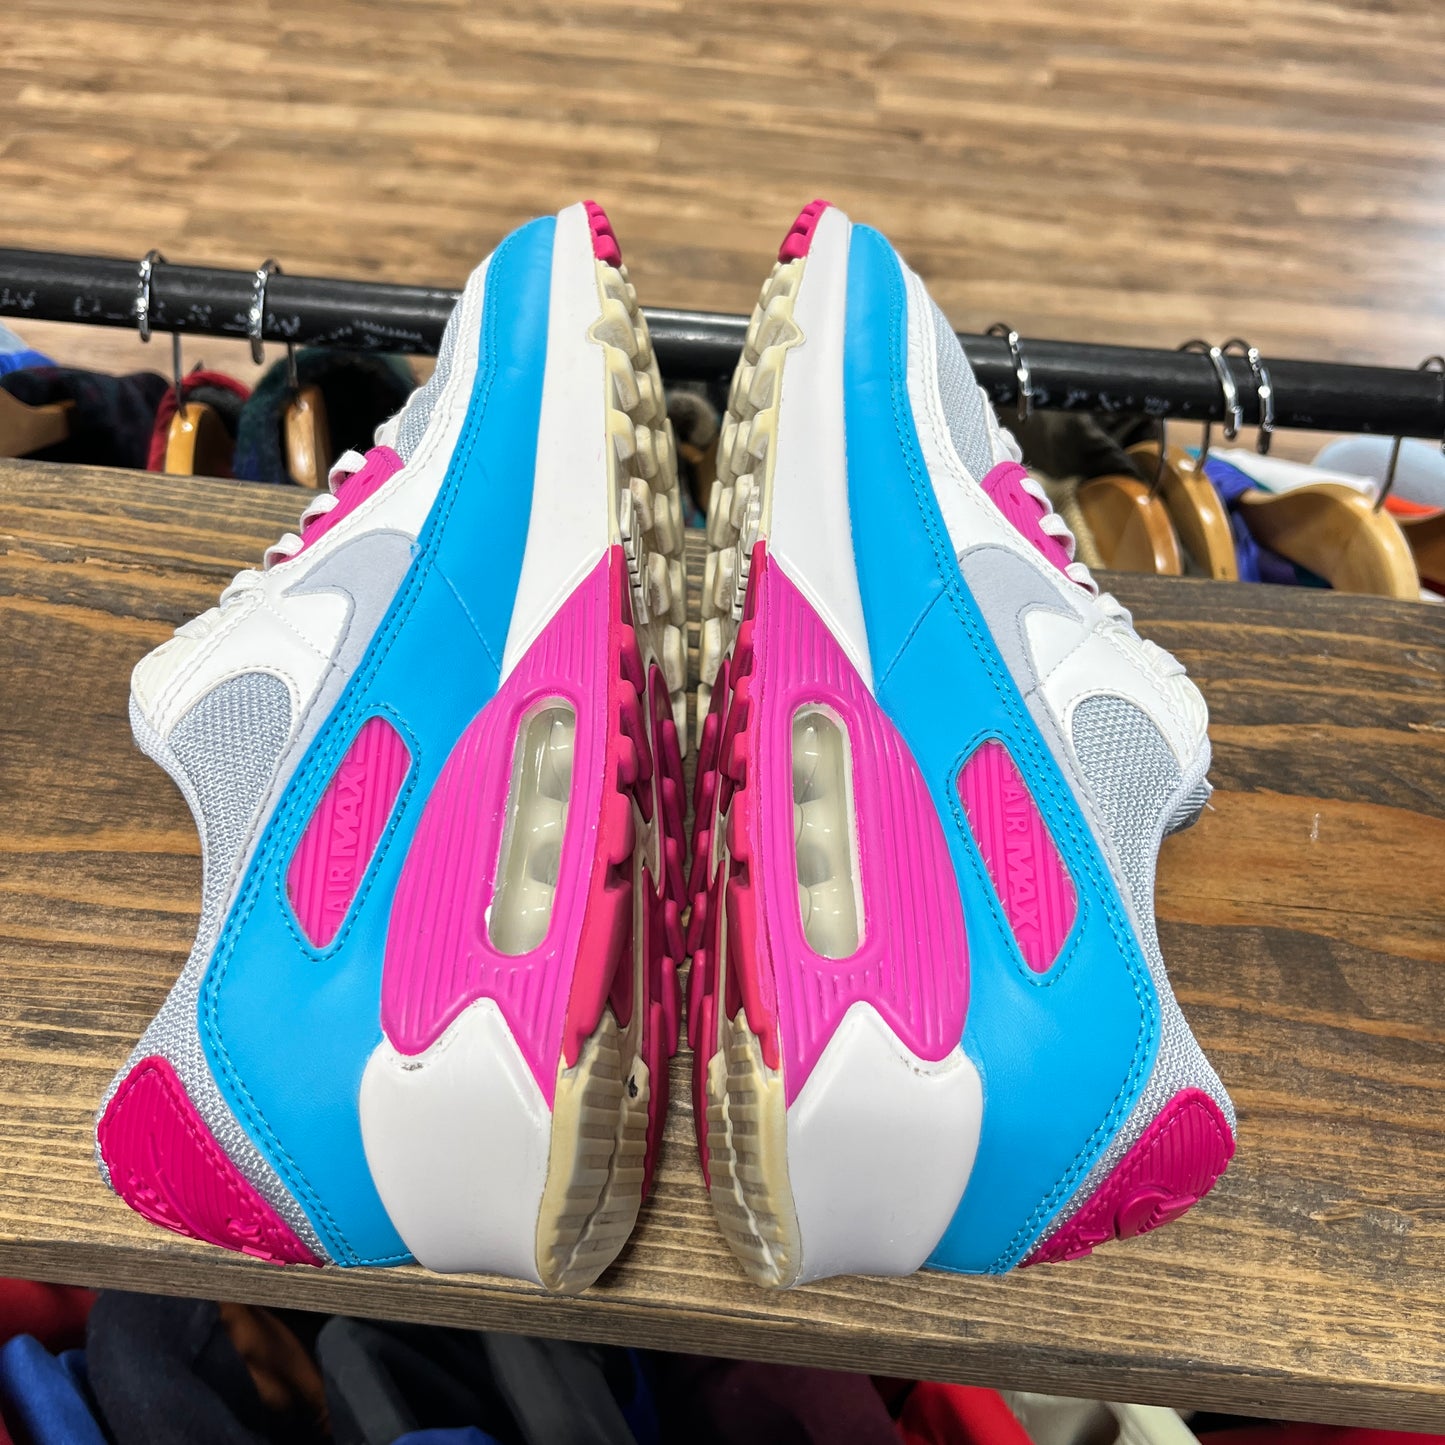 Nike Air Max 90 'Vivid Pink' Size 8.5W/7M